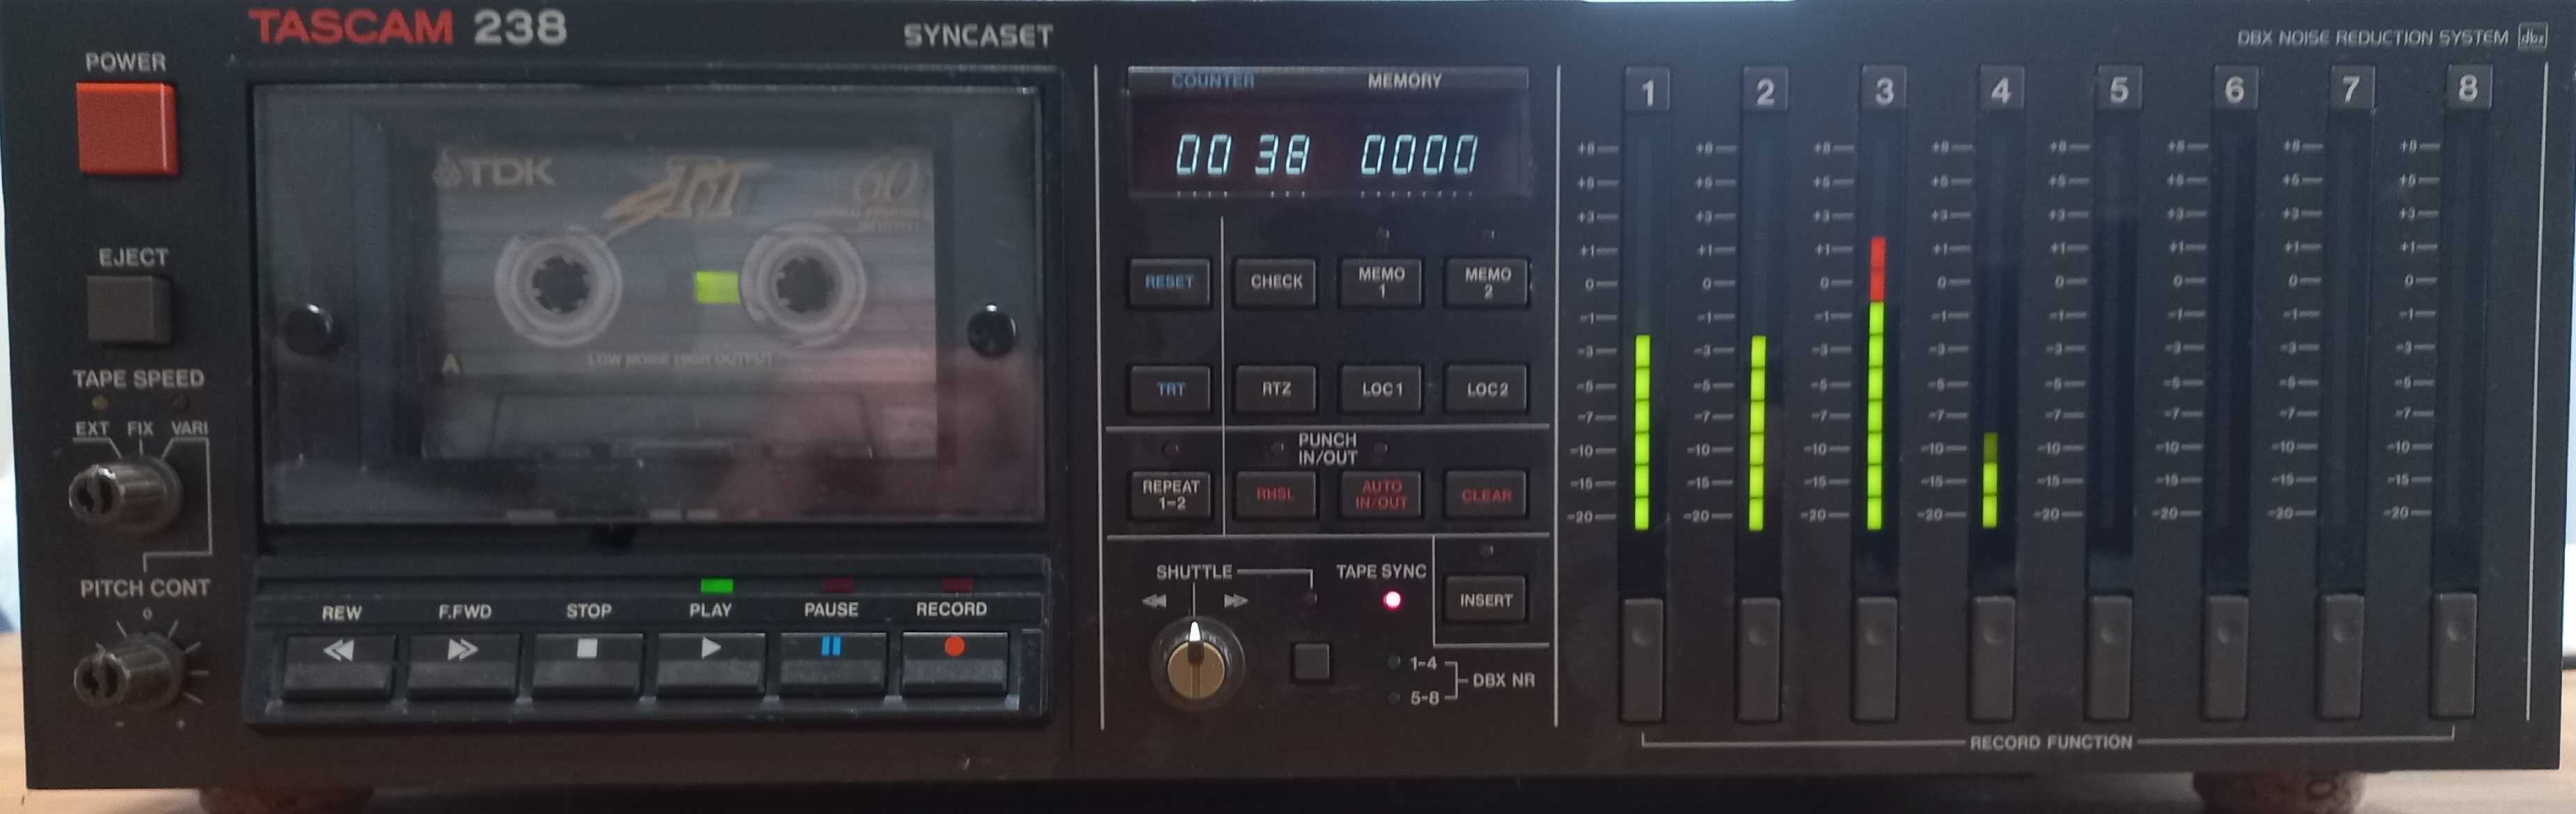 Tascam 238 Syncaset 8 track multitrack recorder